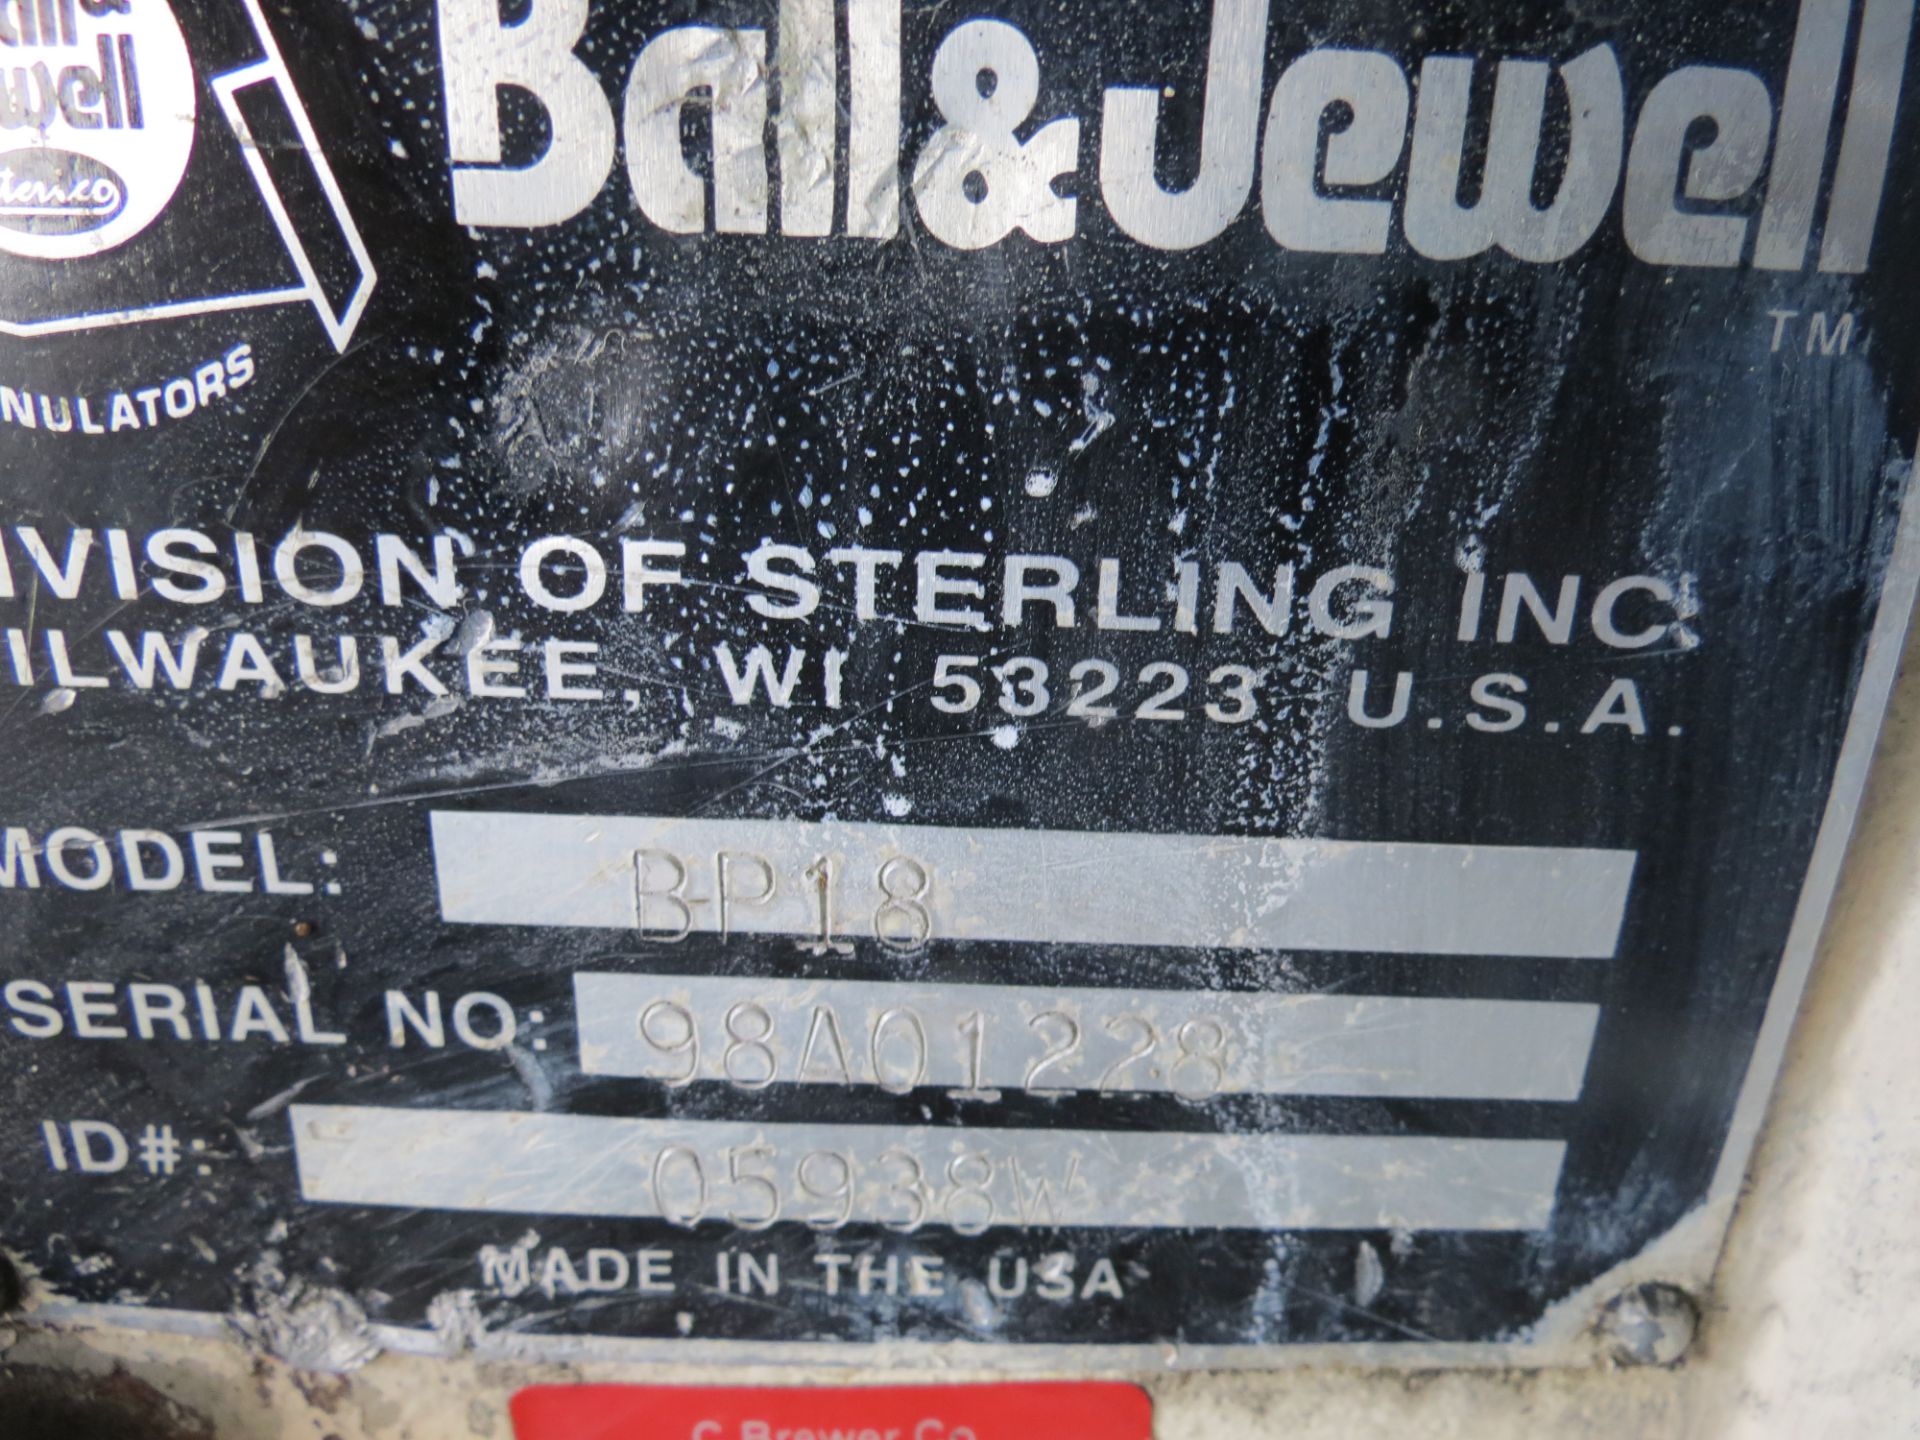 Ball & Jewel granulator BP18, Serial 98AO1228 - Image 5 of 6